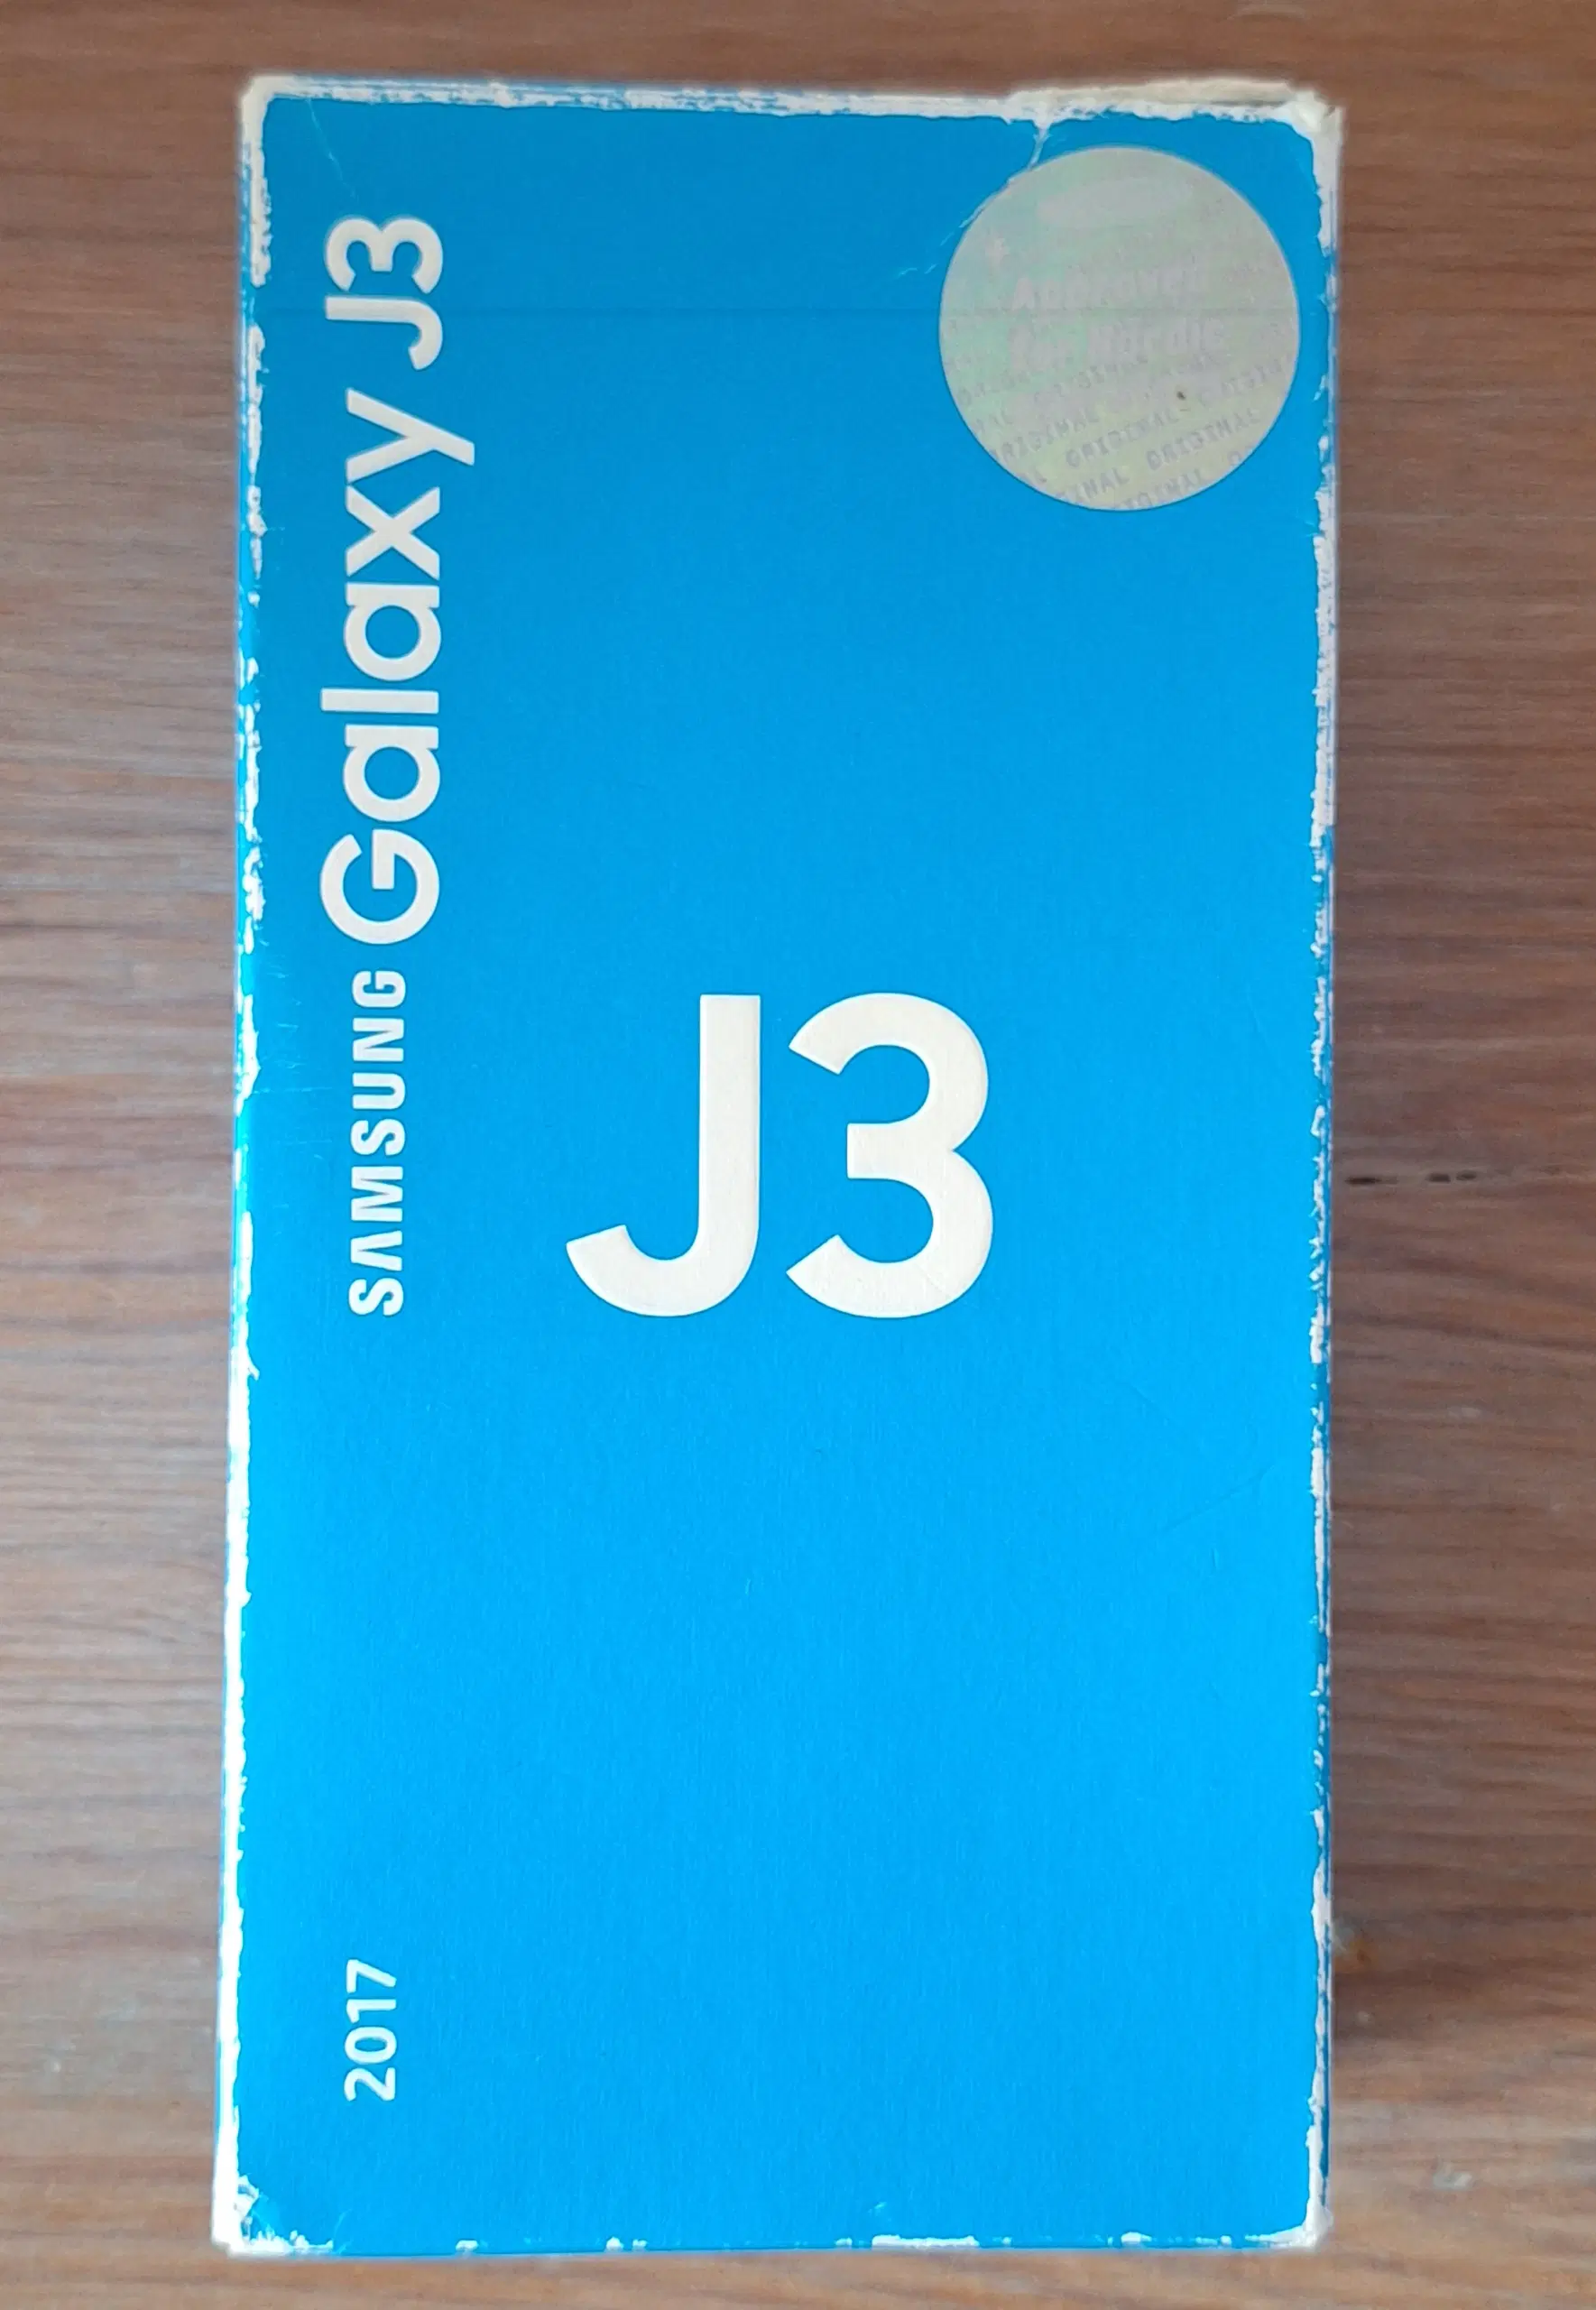 Brugt Samsung Galaxy J3 (2017) mobil sælges